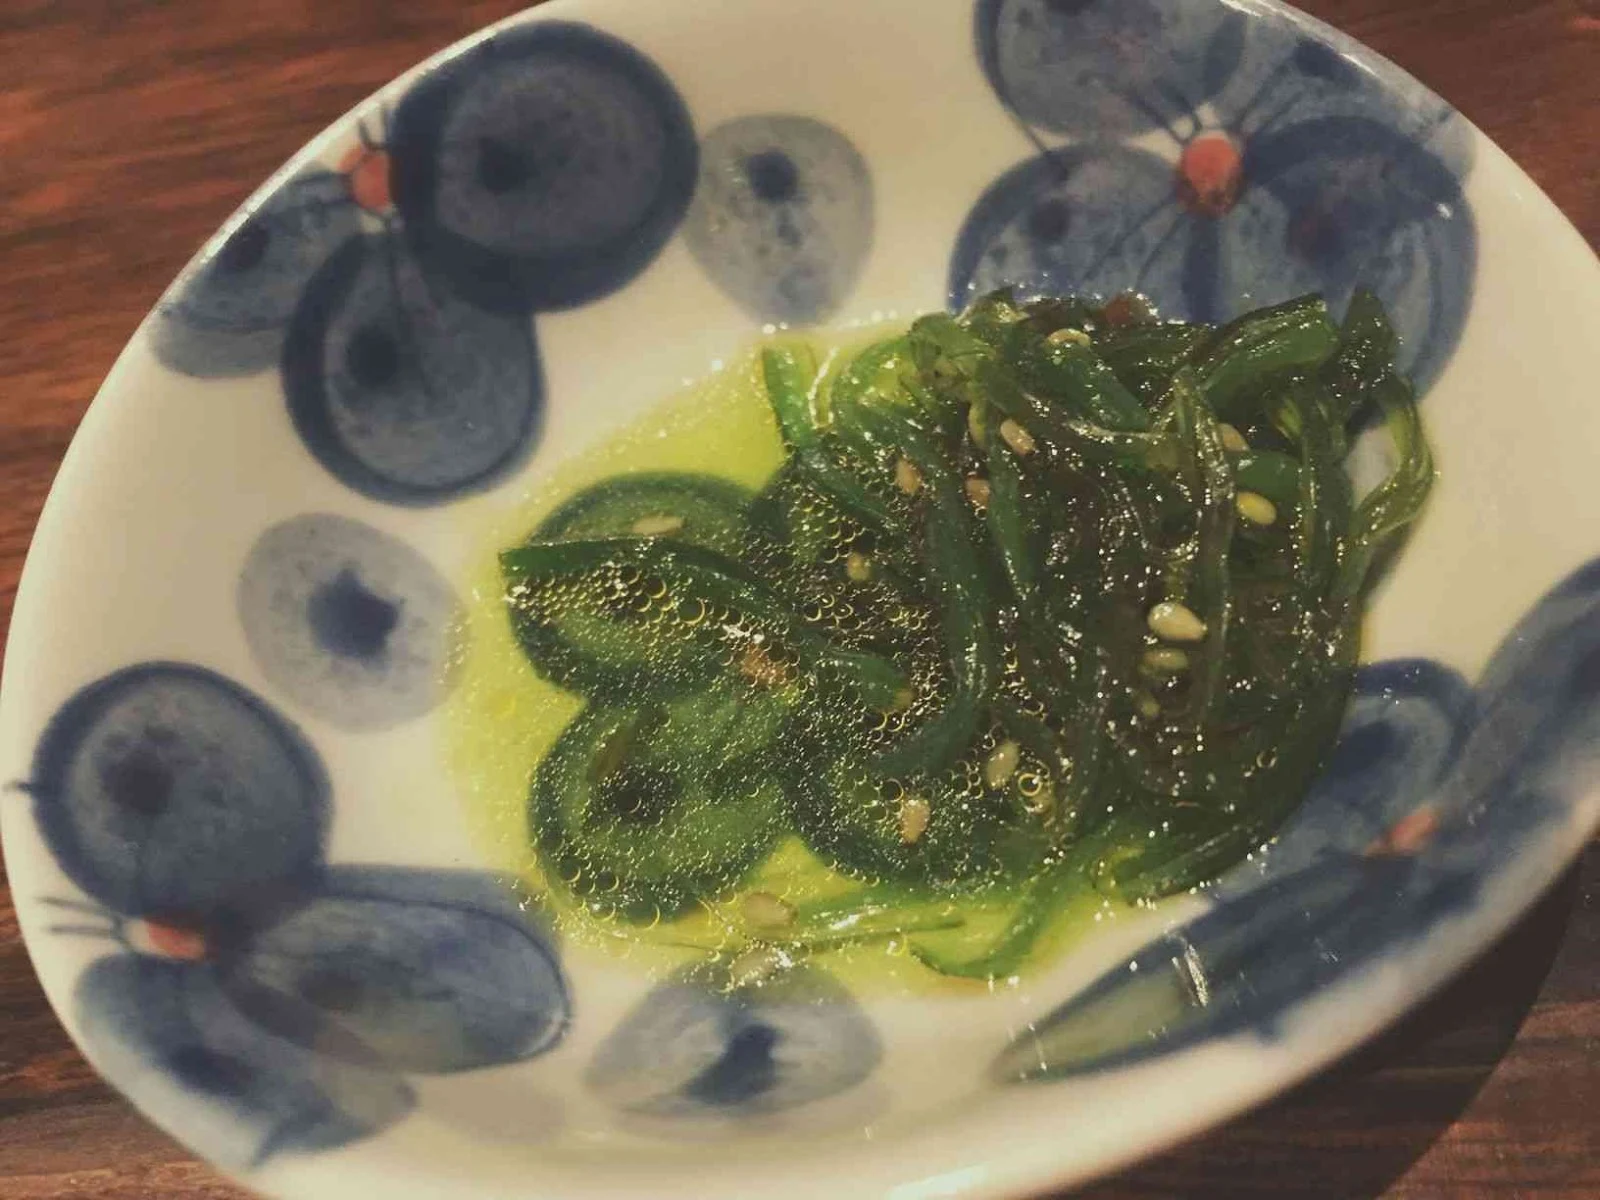 Ogawa Traditional Japanese Restaurant's seaweed salad